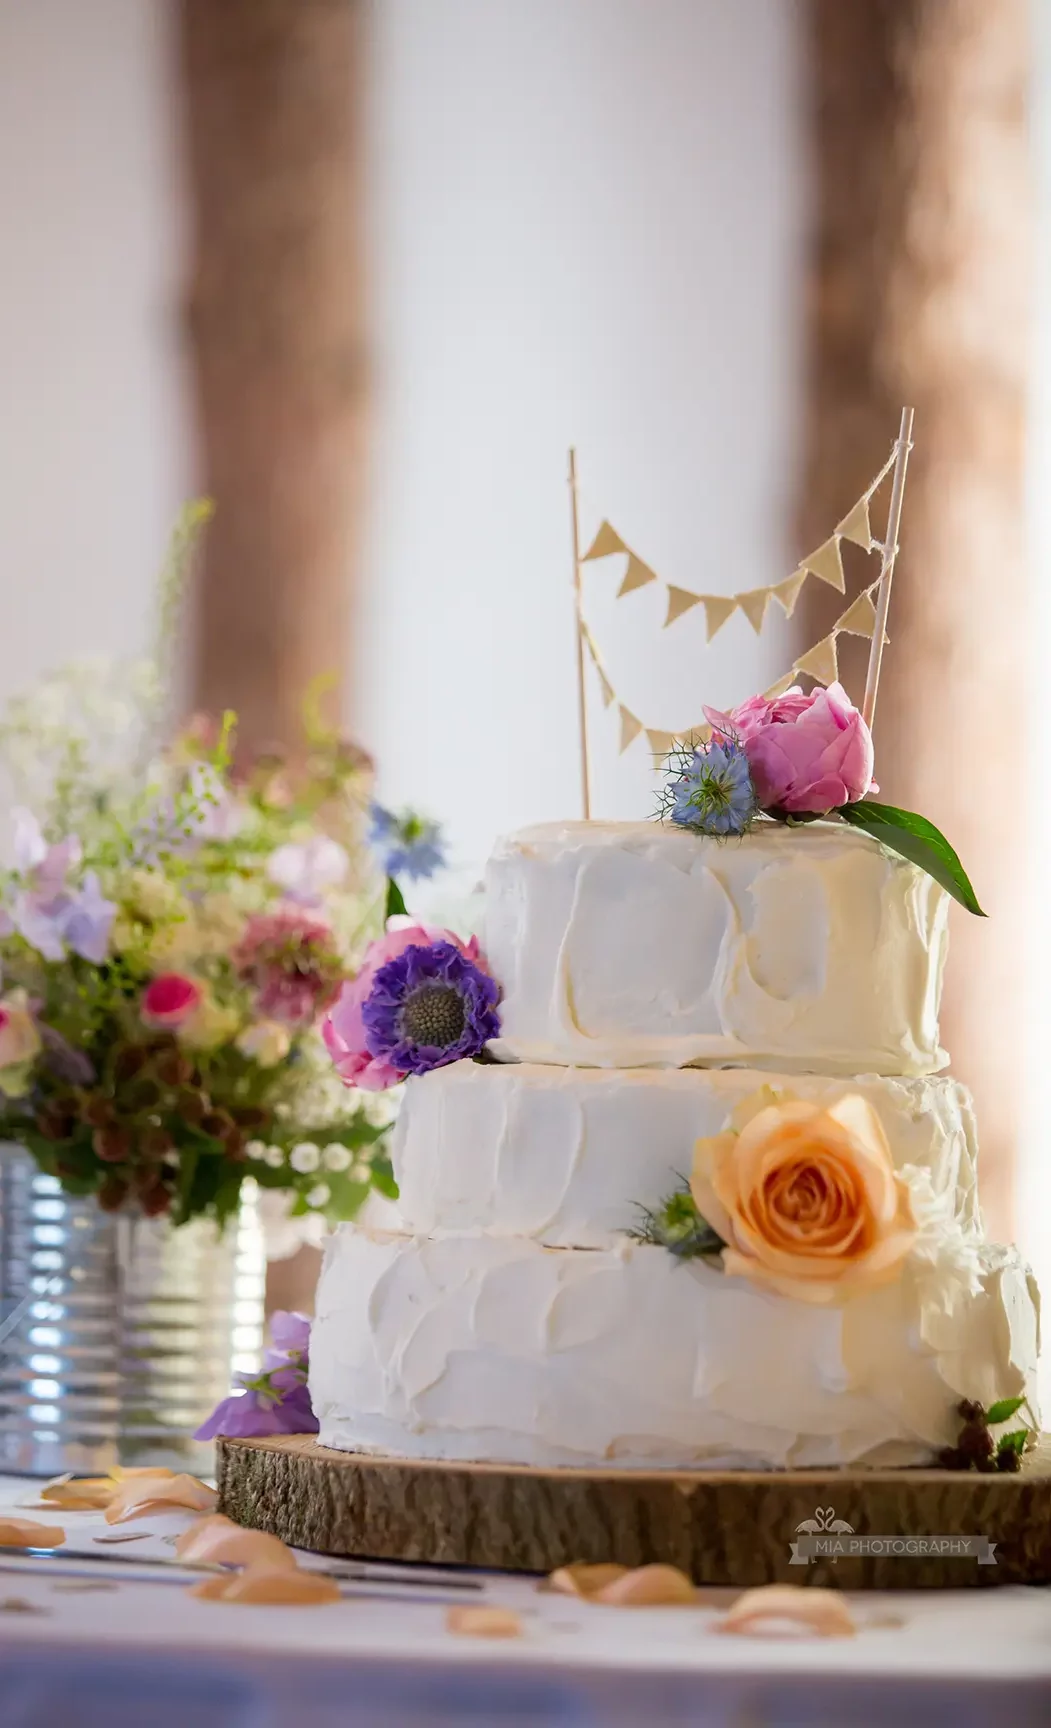 Clock Barn Buttercream wedding cake with flower decorations